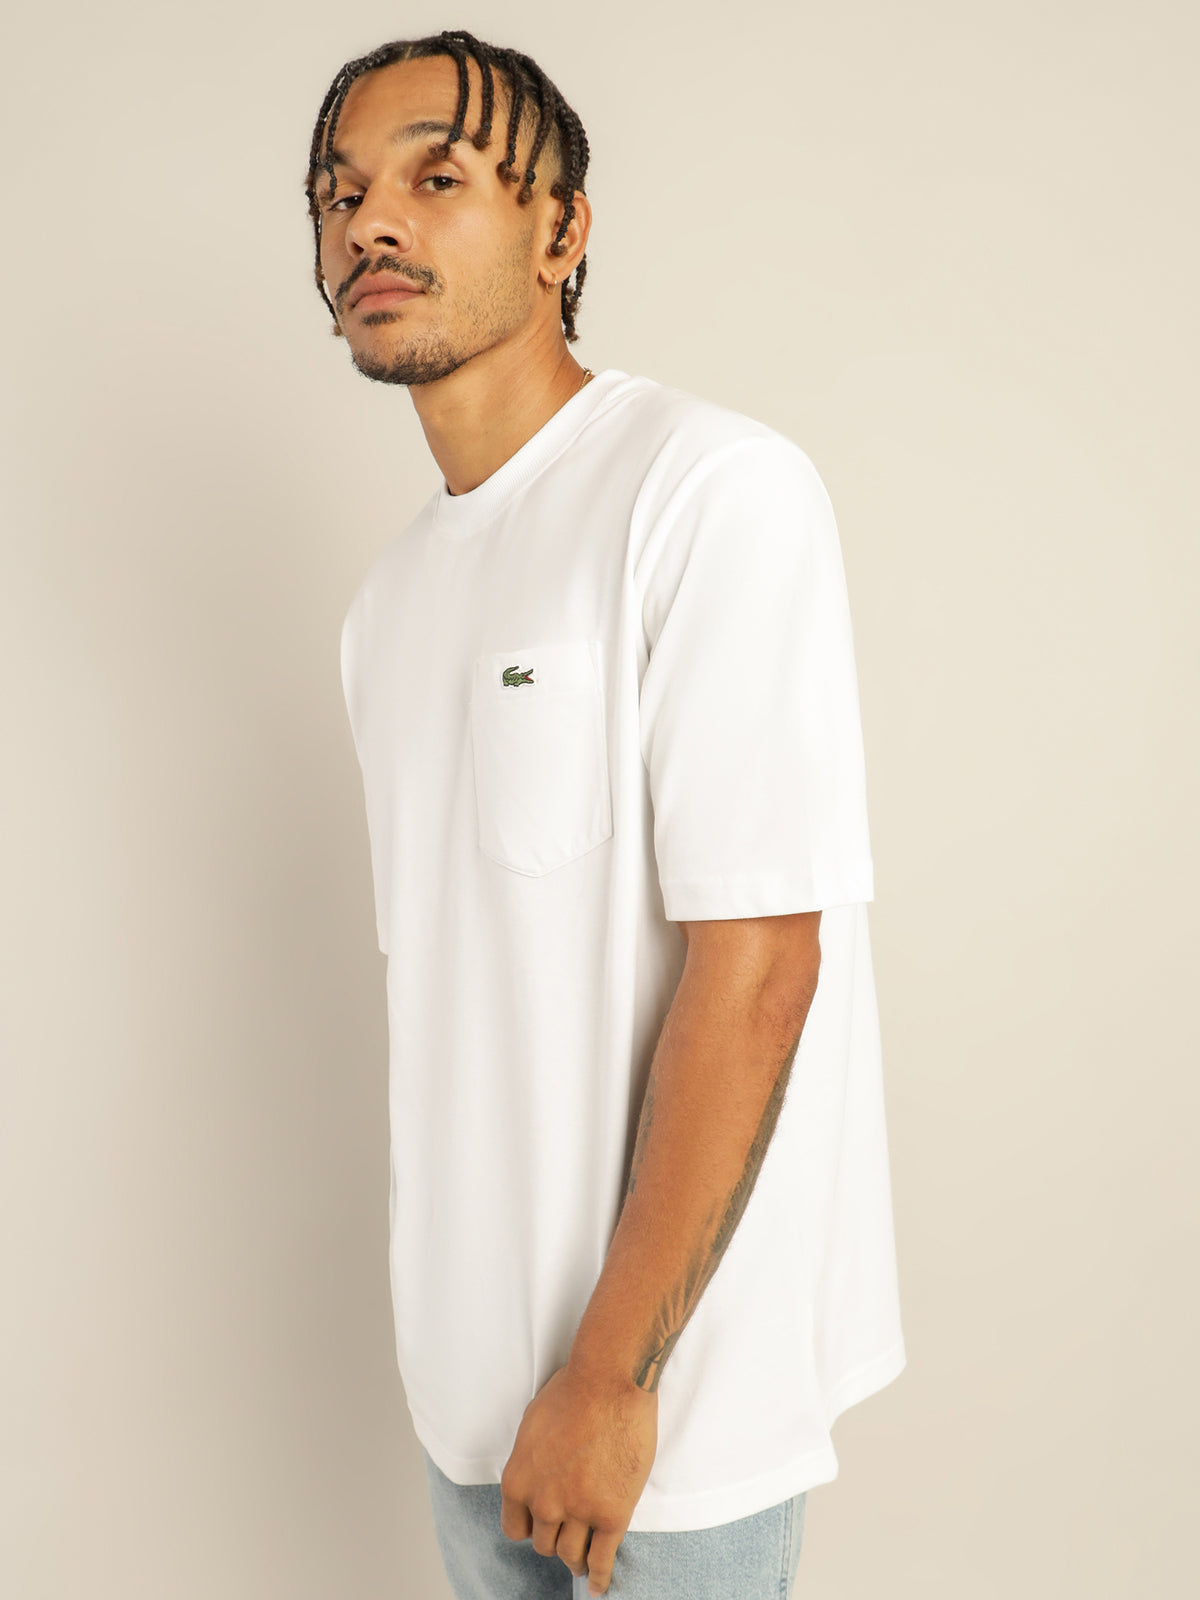 L!ve Twist Essential Pocket T-Shirt in White